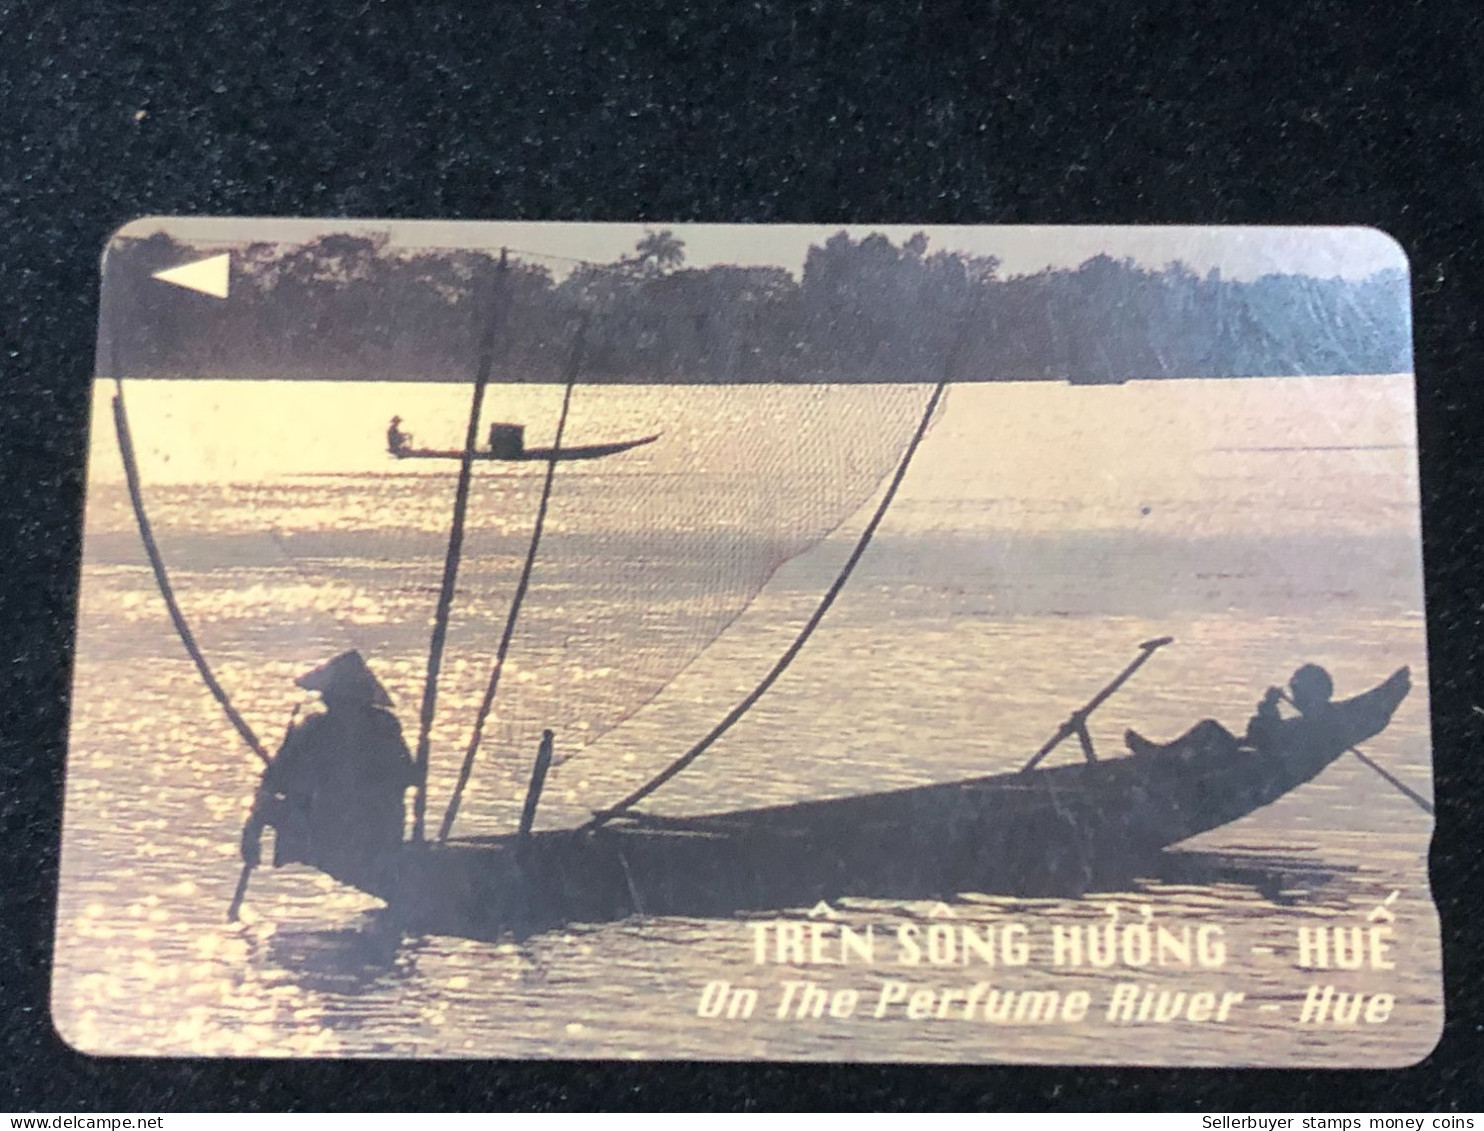 Card Phonekad Vietnam(ON THE PERFUME RIVER 300 000dong-1995)-1pcs - Vietnam